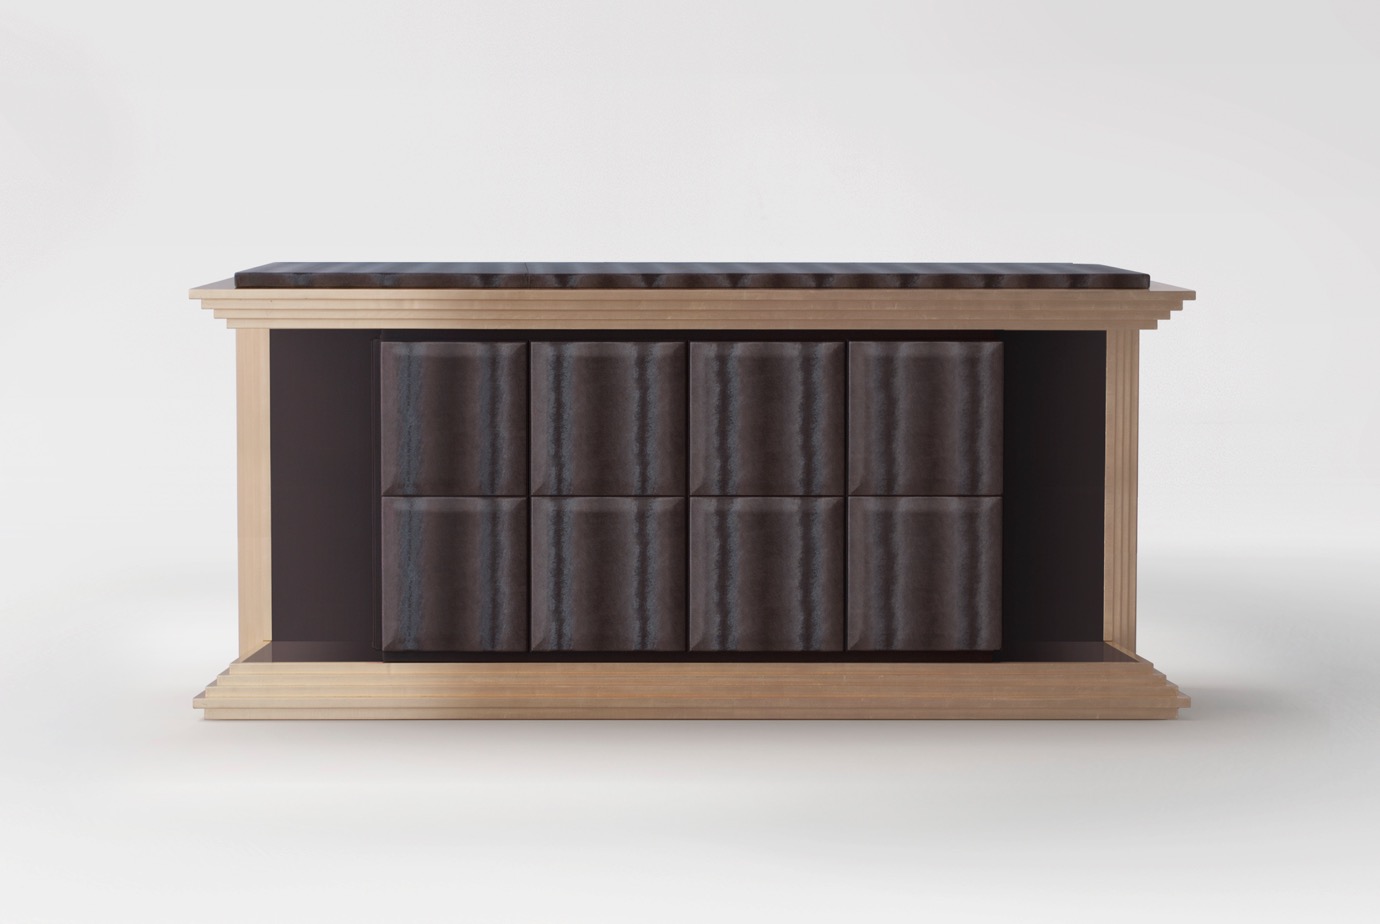 Gold & Chocolate - TV Stand, Sideboard & Vitrine / Carlos Soriano